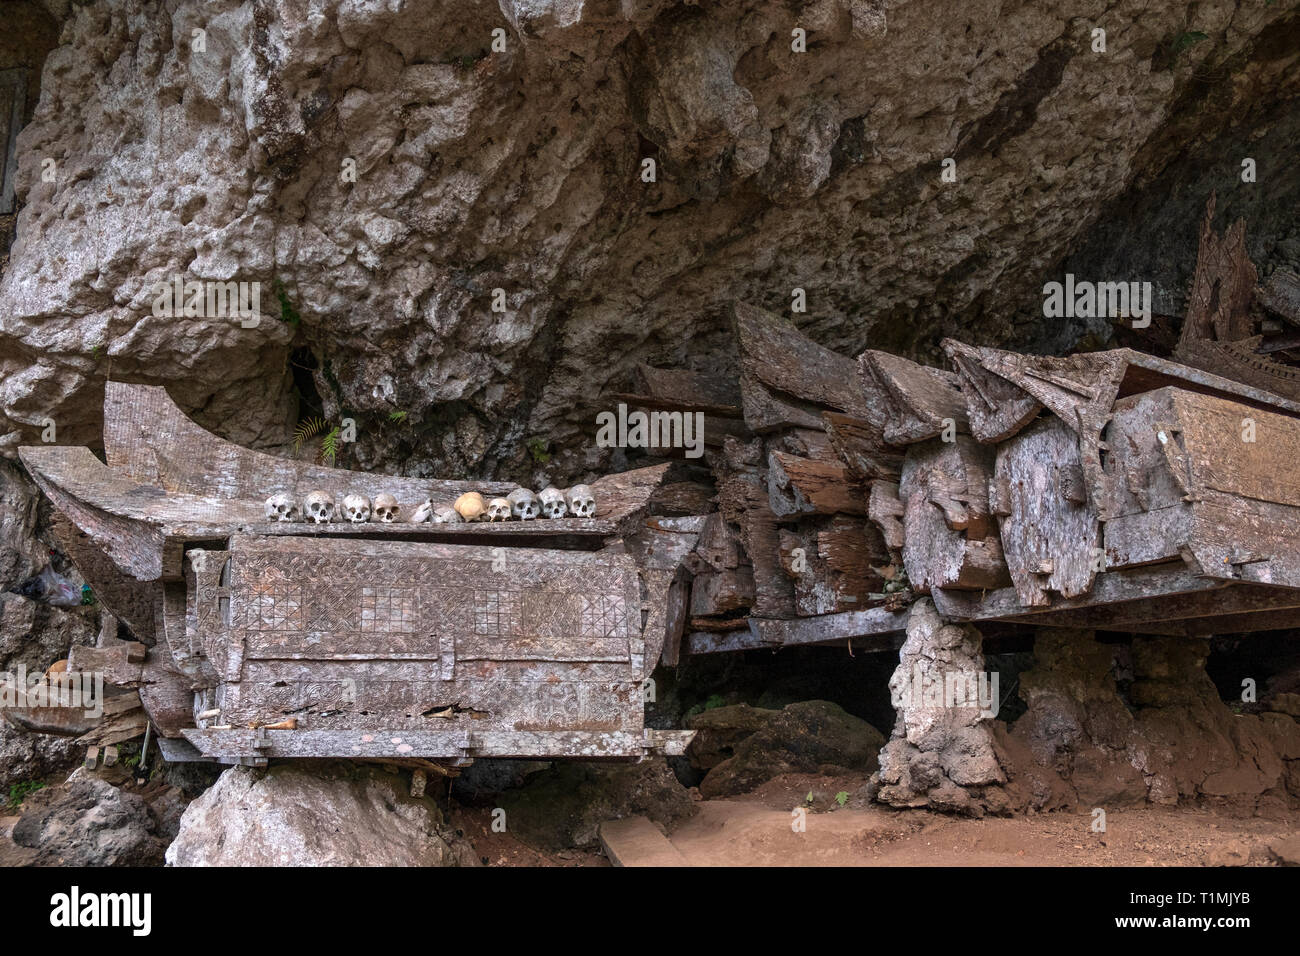 Hanging coffins in the Londa caves, Toraja, Indonesia Stock Photo